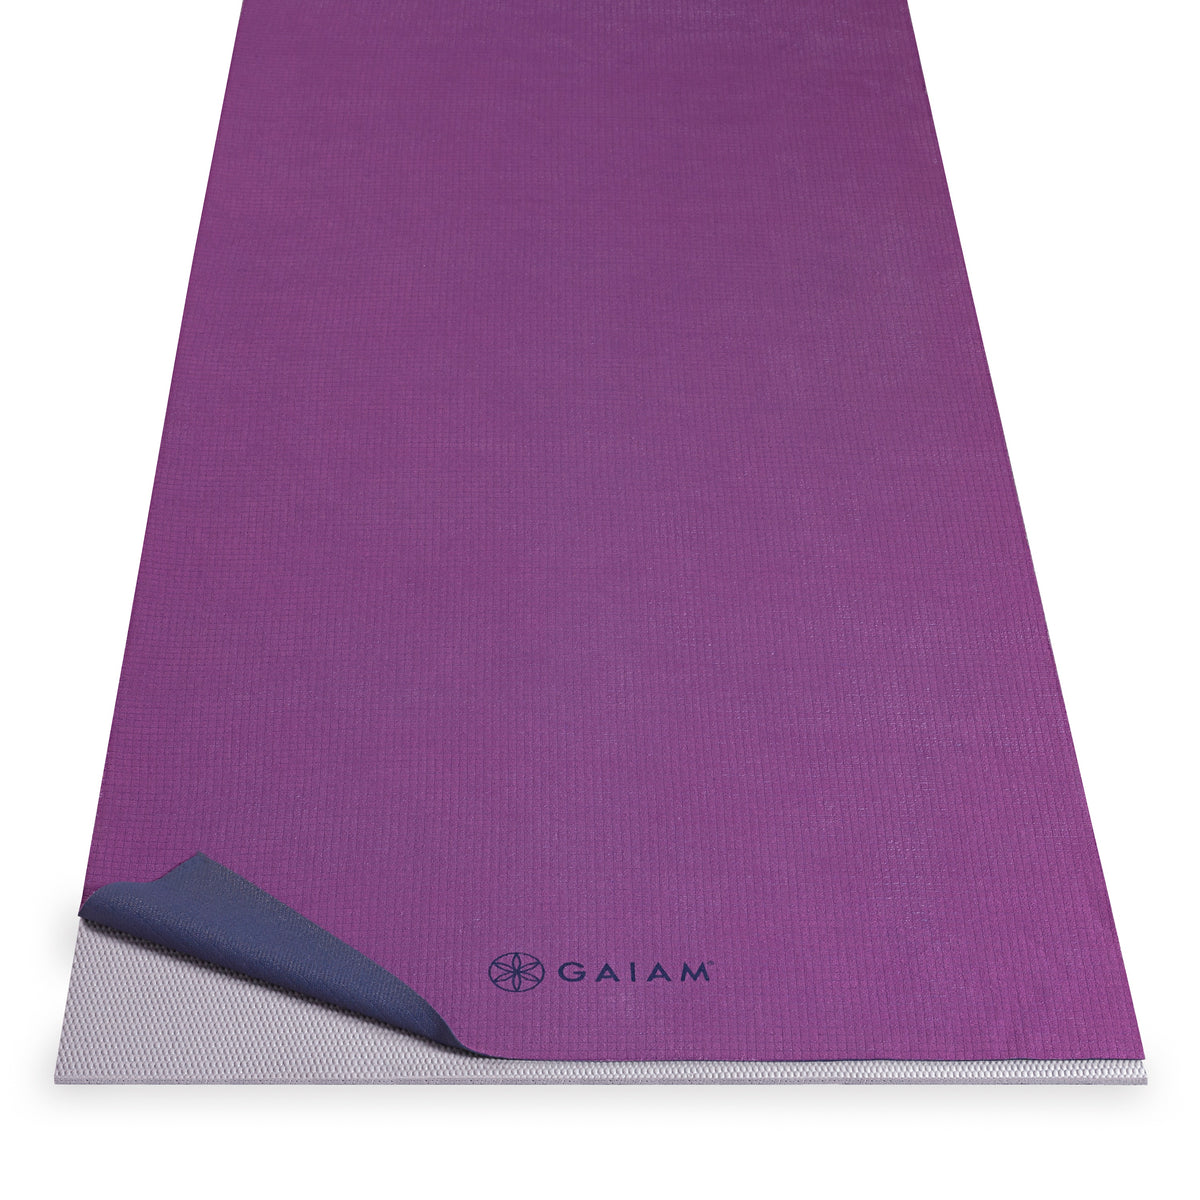 Gaiam No-Slip Yoga Towel Purple/Navy on mat